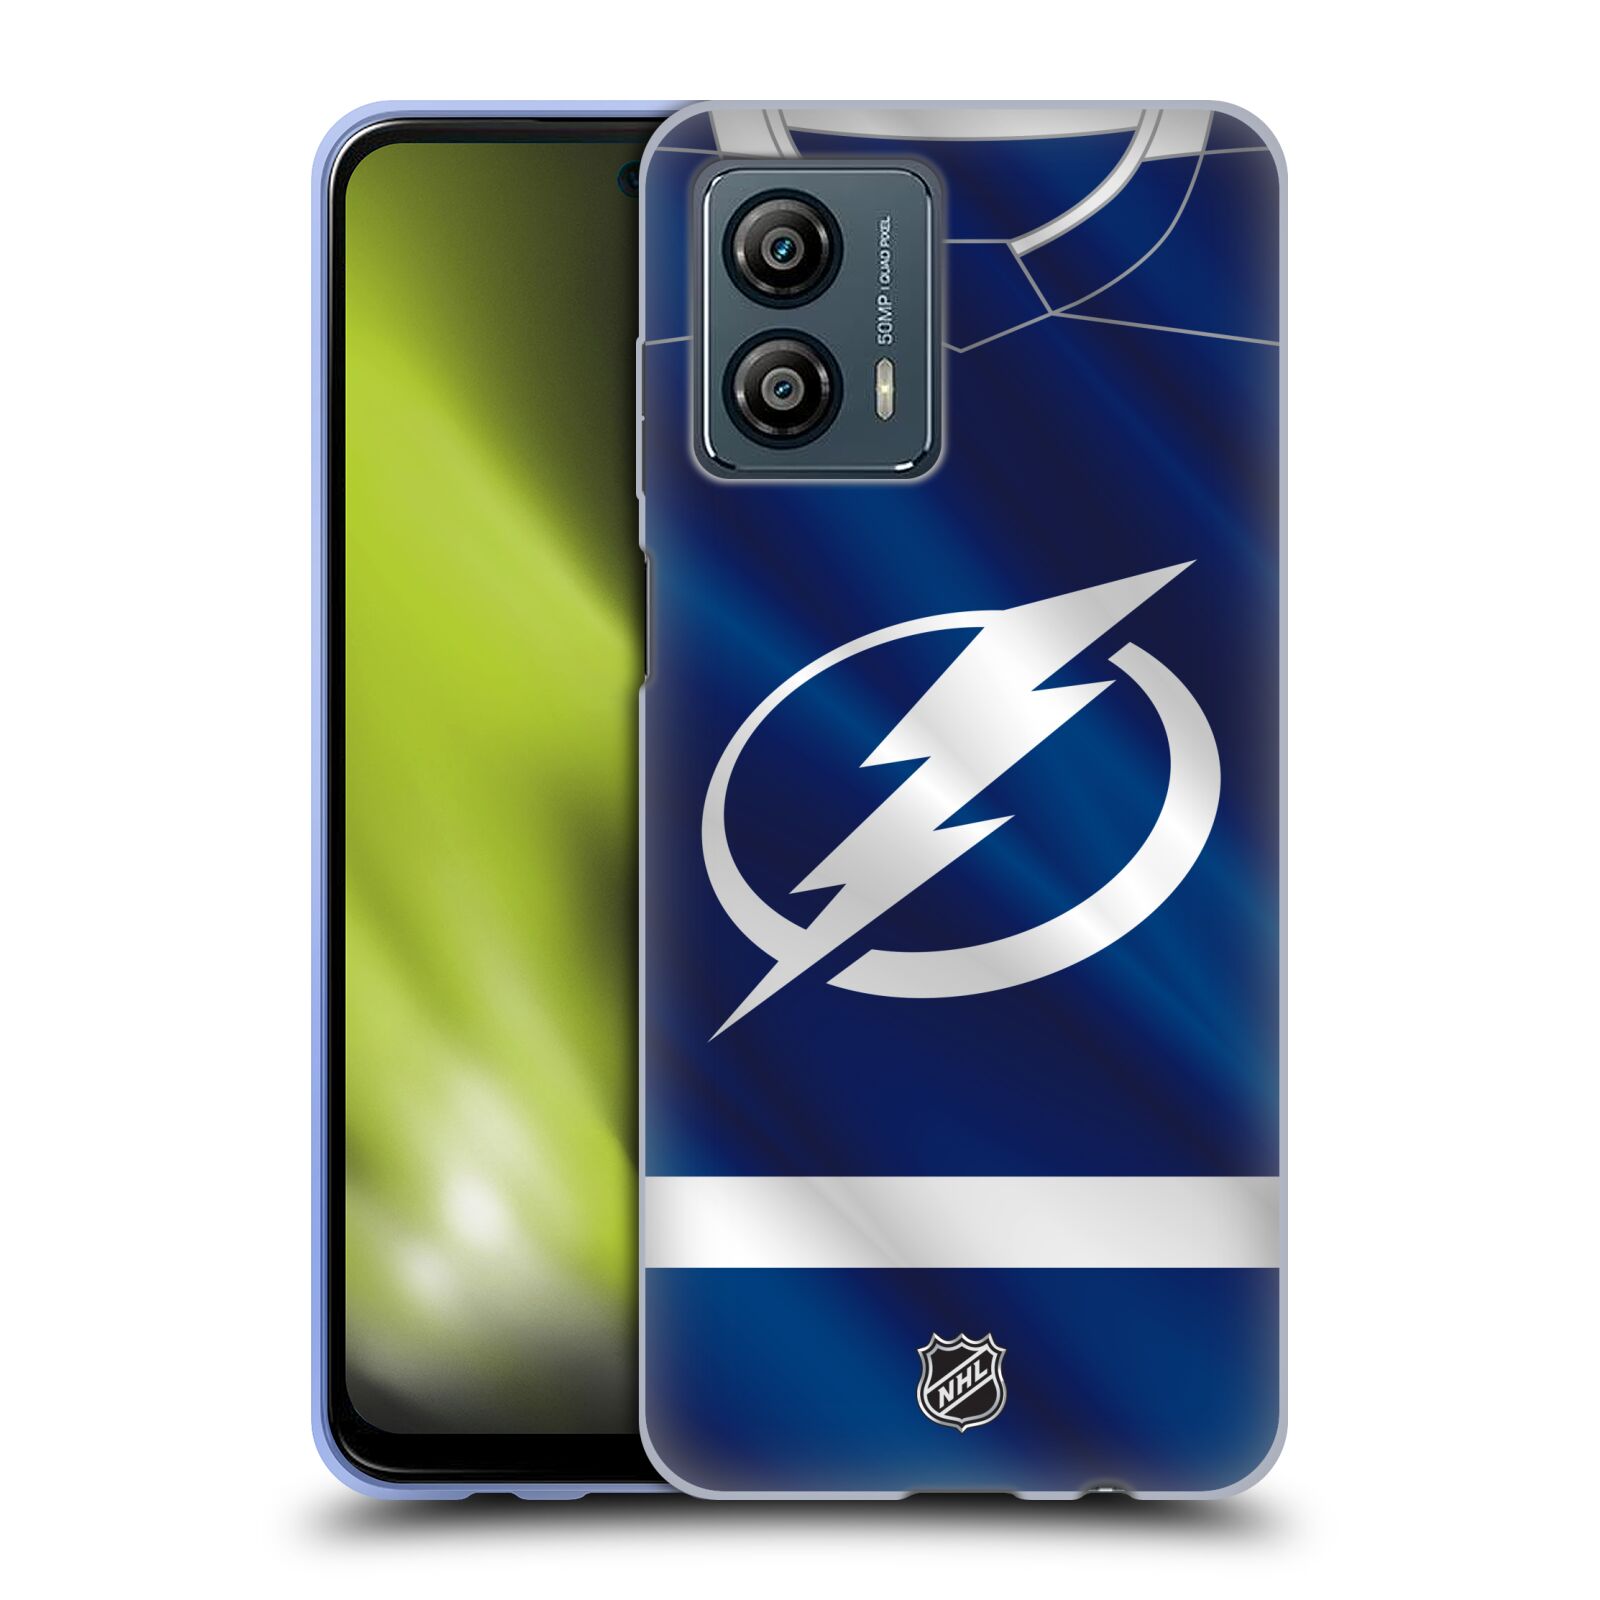 Silikonové pouzdro na mobil Motorola Moto G53 5G - NHL - Dres Tampa Bay Lightning (Silikonový kryt, obal, pouzdro na mobilní telefon Motorola Moto G53 5G s licencovaným motivem NHL - Dres Tampa Bay Lightning)